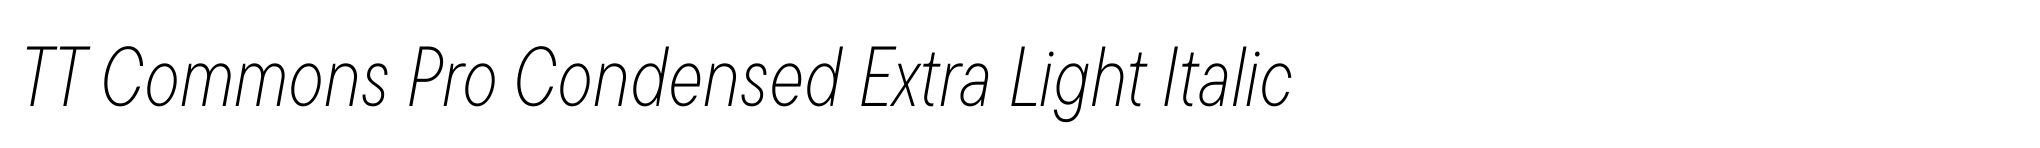 TT Commons Pro Condensed Extra Light Italic image